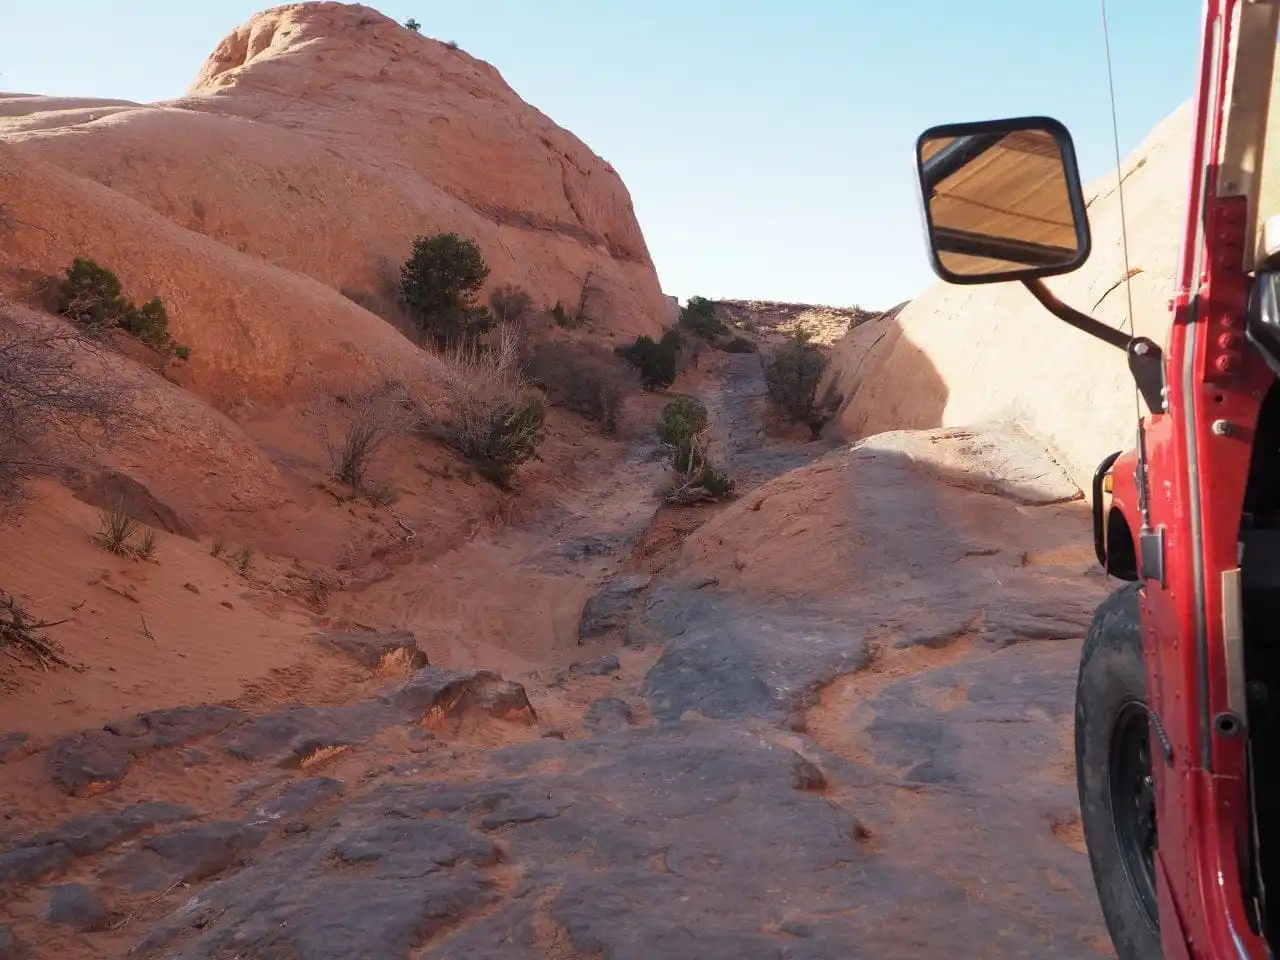 The Hummer climbing an incredibly steep rock face